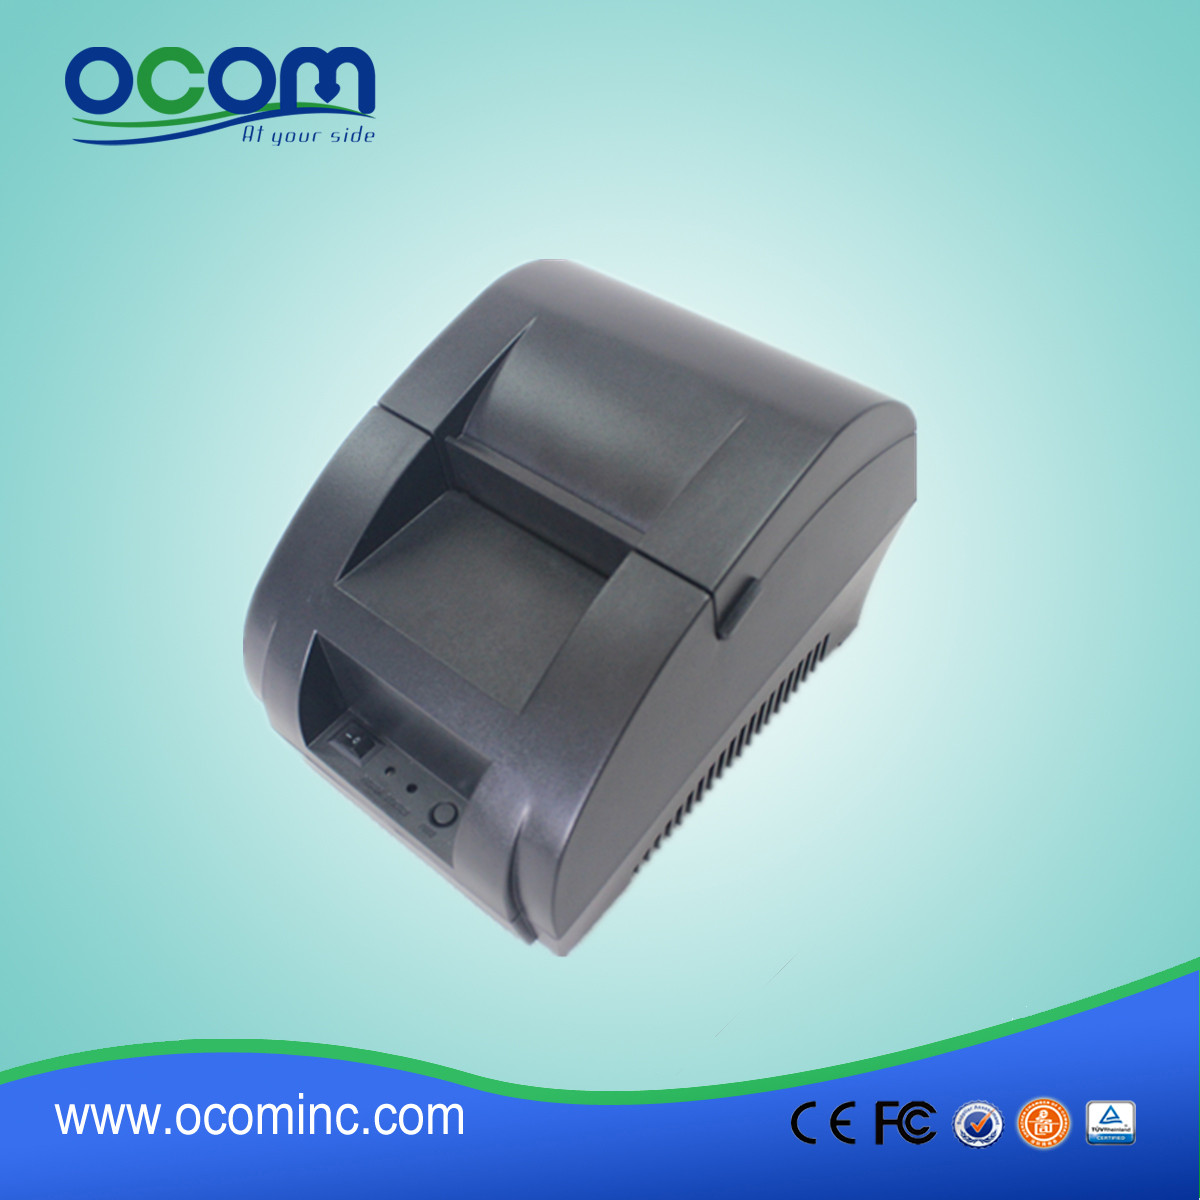 58mm thermal receipt printer with built-in power adaptor OCPP-58Z-U